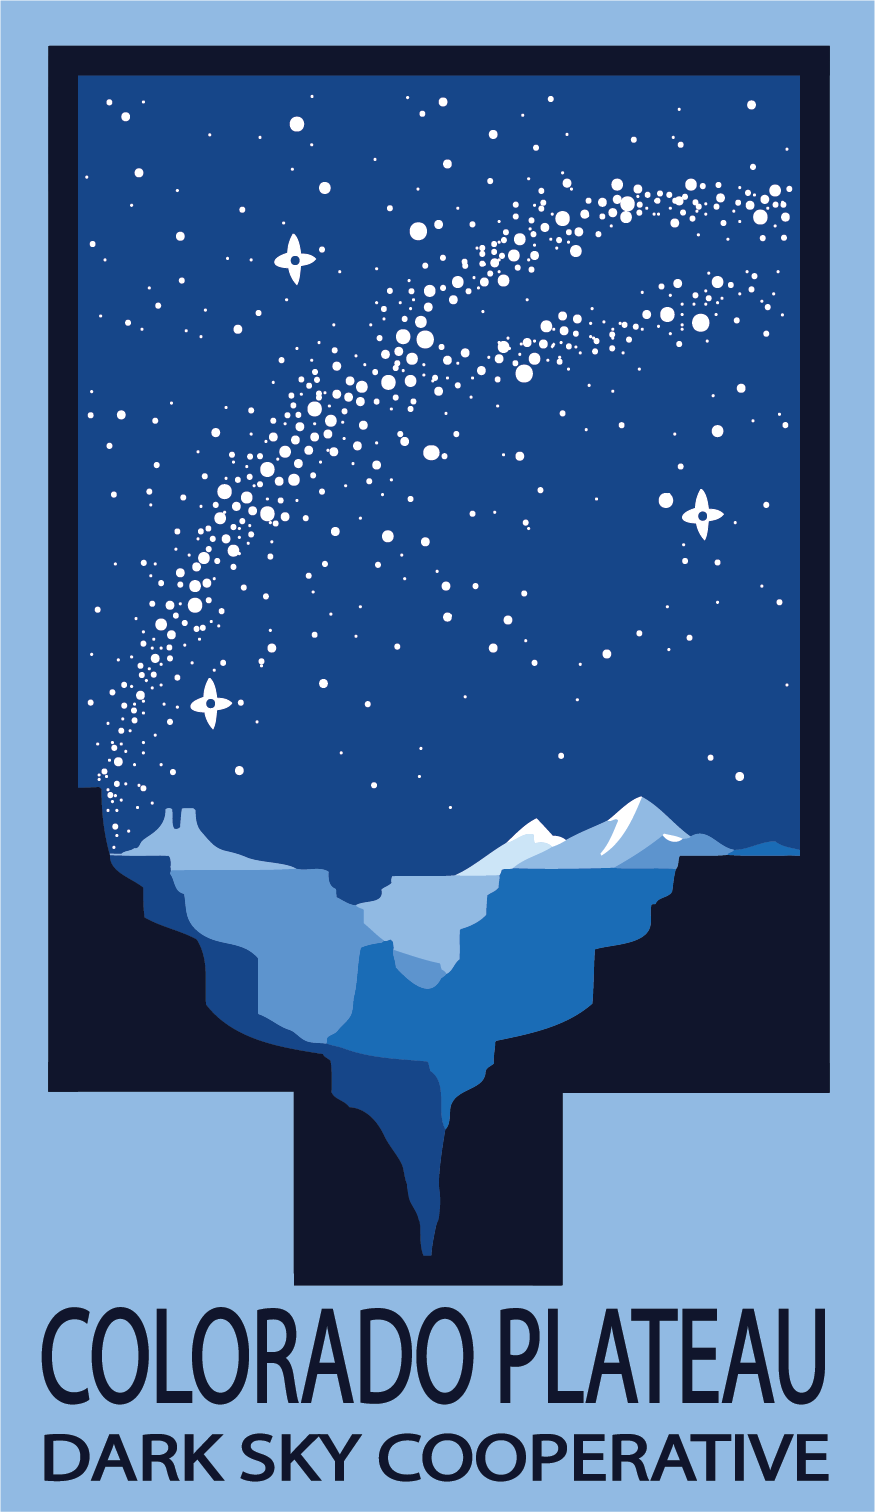 Colorado Plateau Dark Sky Cooperative logo